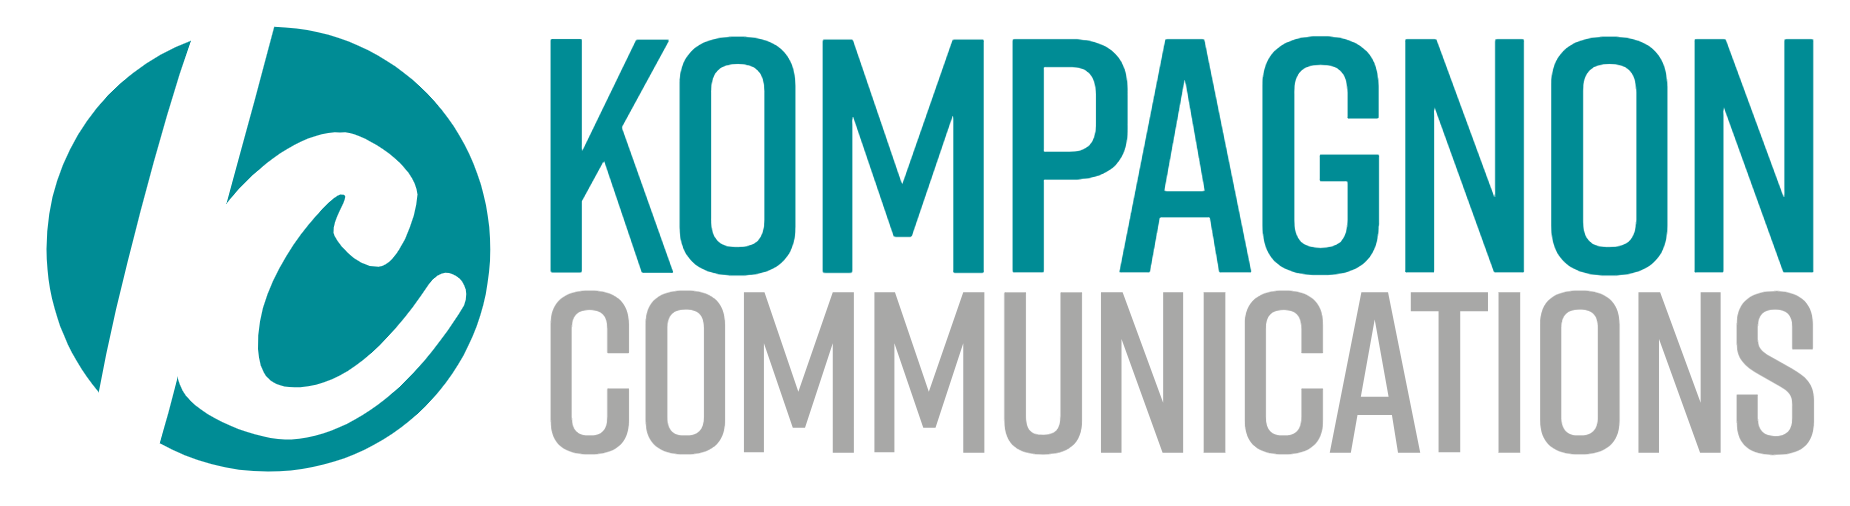 KOMPAGNON communications BP GmbH